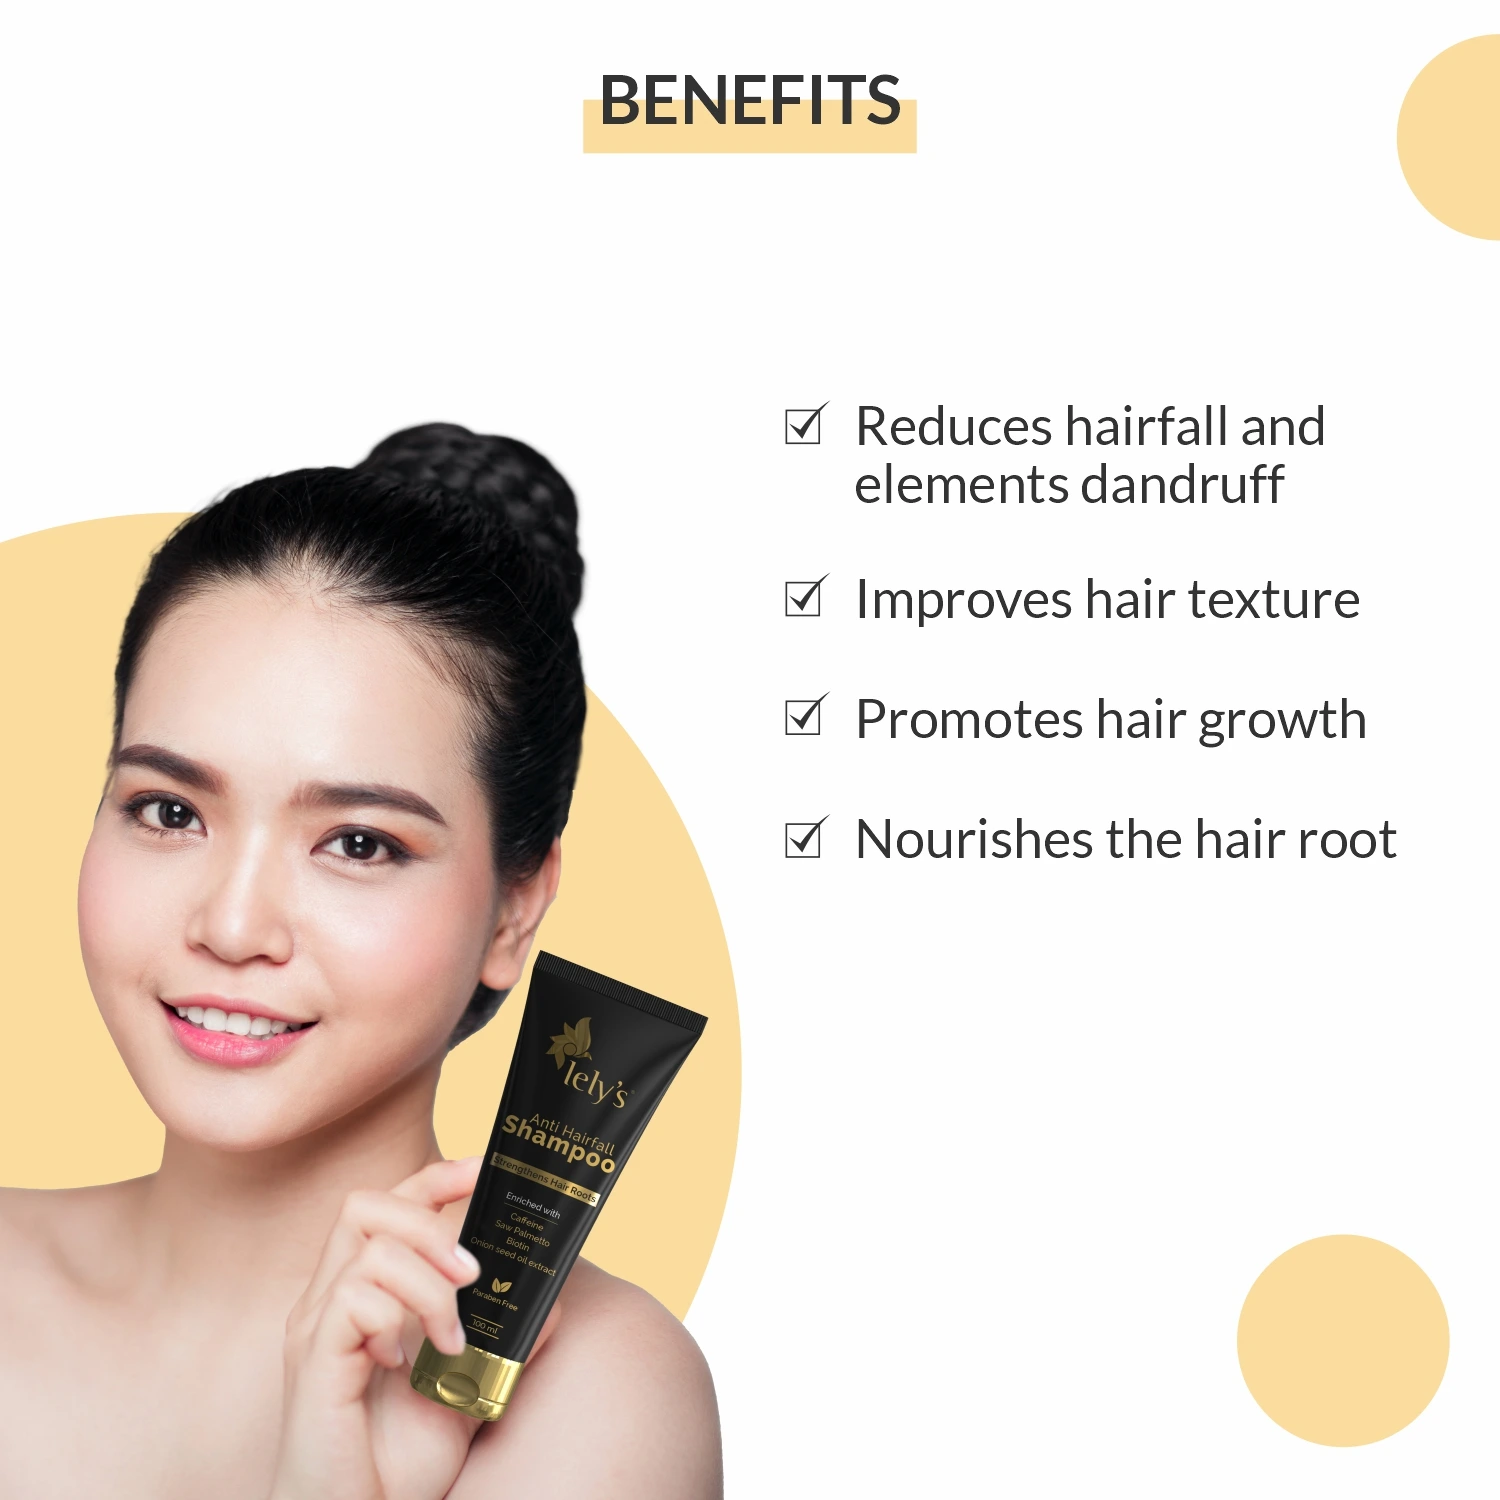 Lely's Anti Hair fall Shampoo Benefits